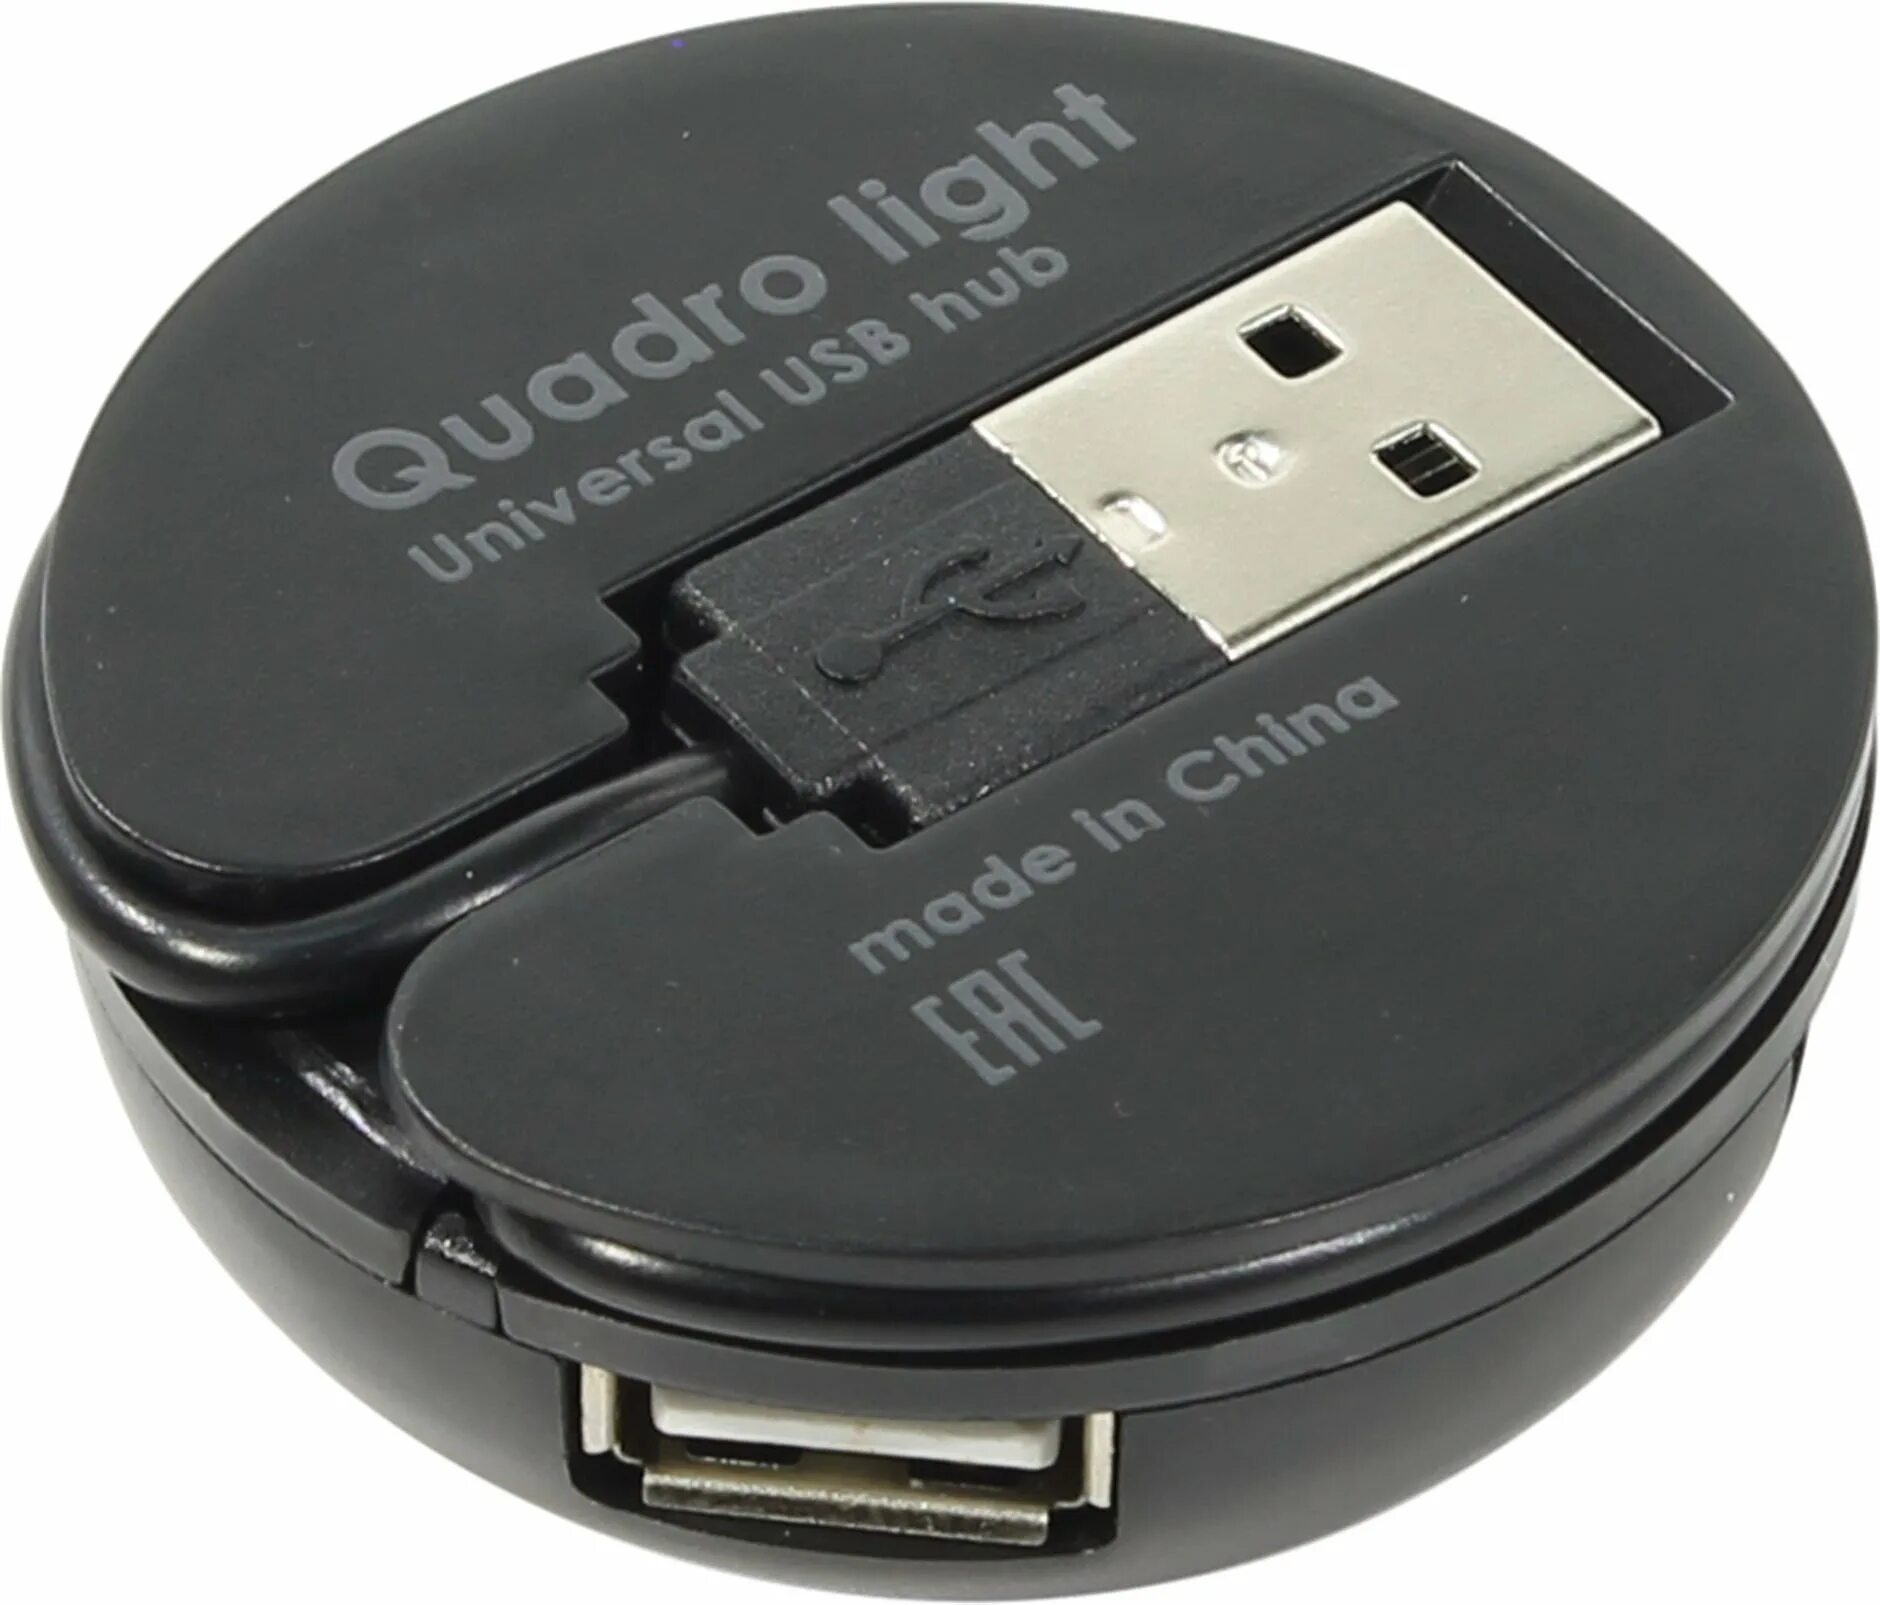 Defender quadro. Хаб Defender Quadro Light, USB 2.0, 4 порта, 83201. USB-Hub Defender Quadro Light (83201) usb2 4 Port. USB-разветвитель Defender Quadro Light. Defender Quadro Light USB 2.0, 4 порта.